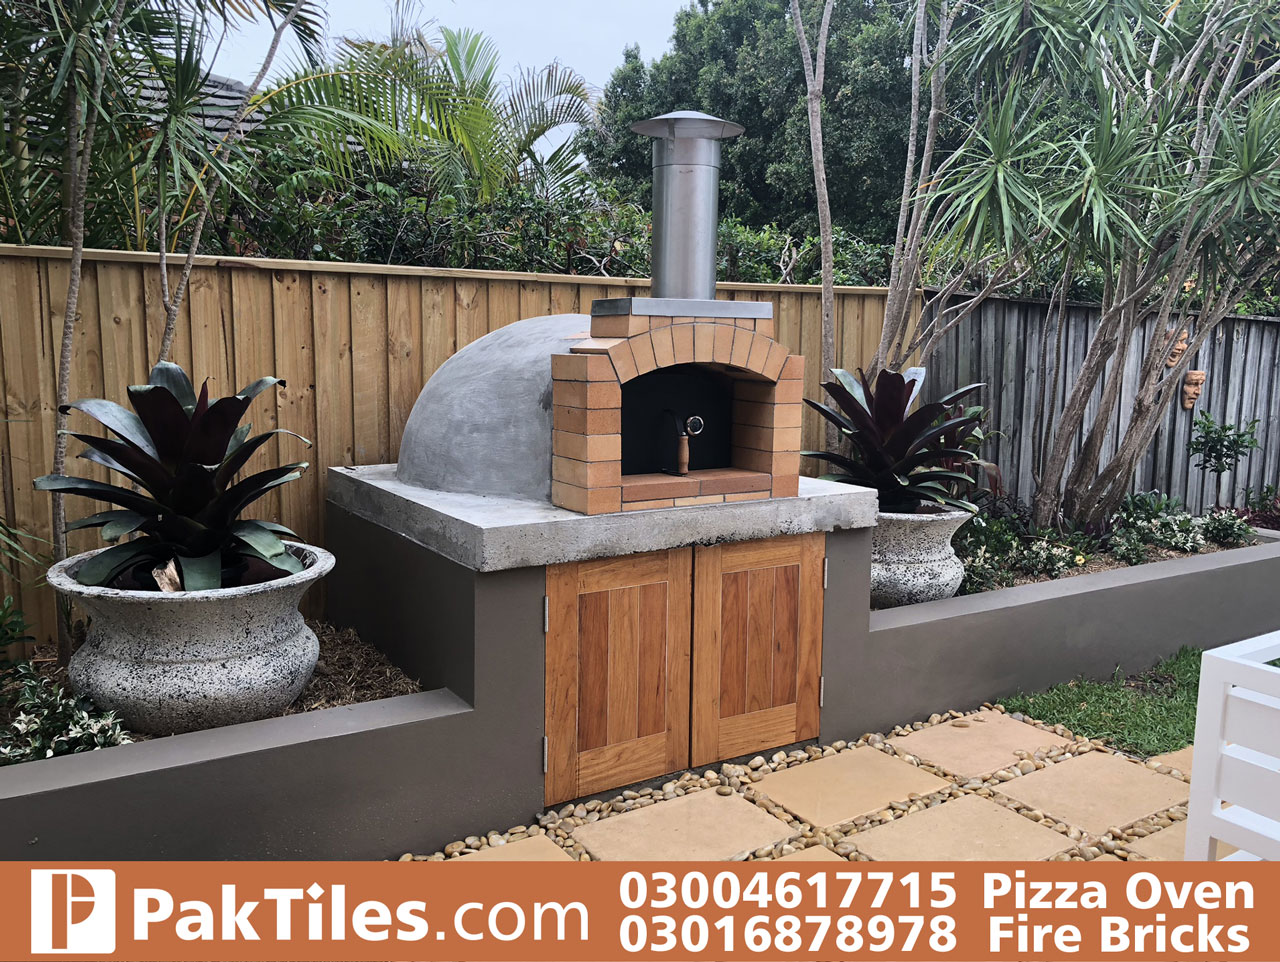 Outdoor wood fired pizza oven fire bricks in karachi